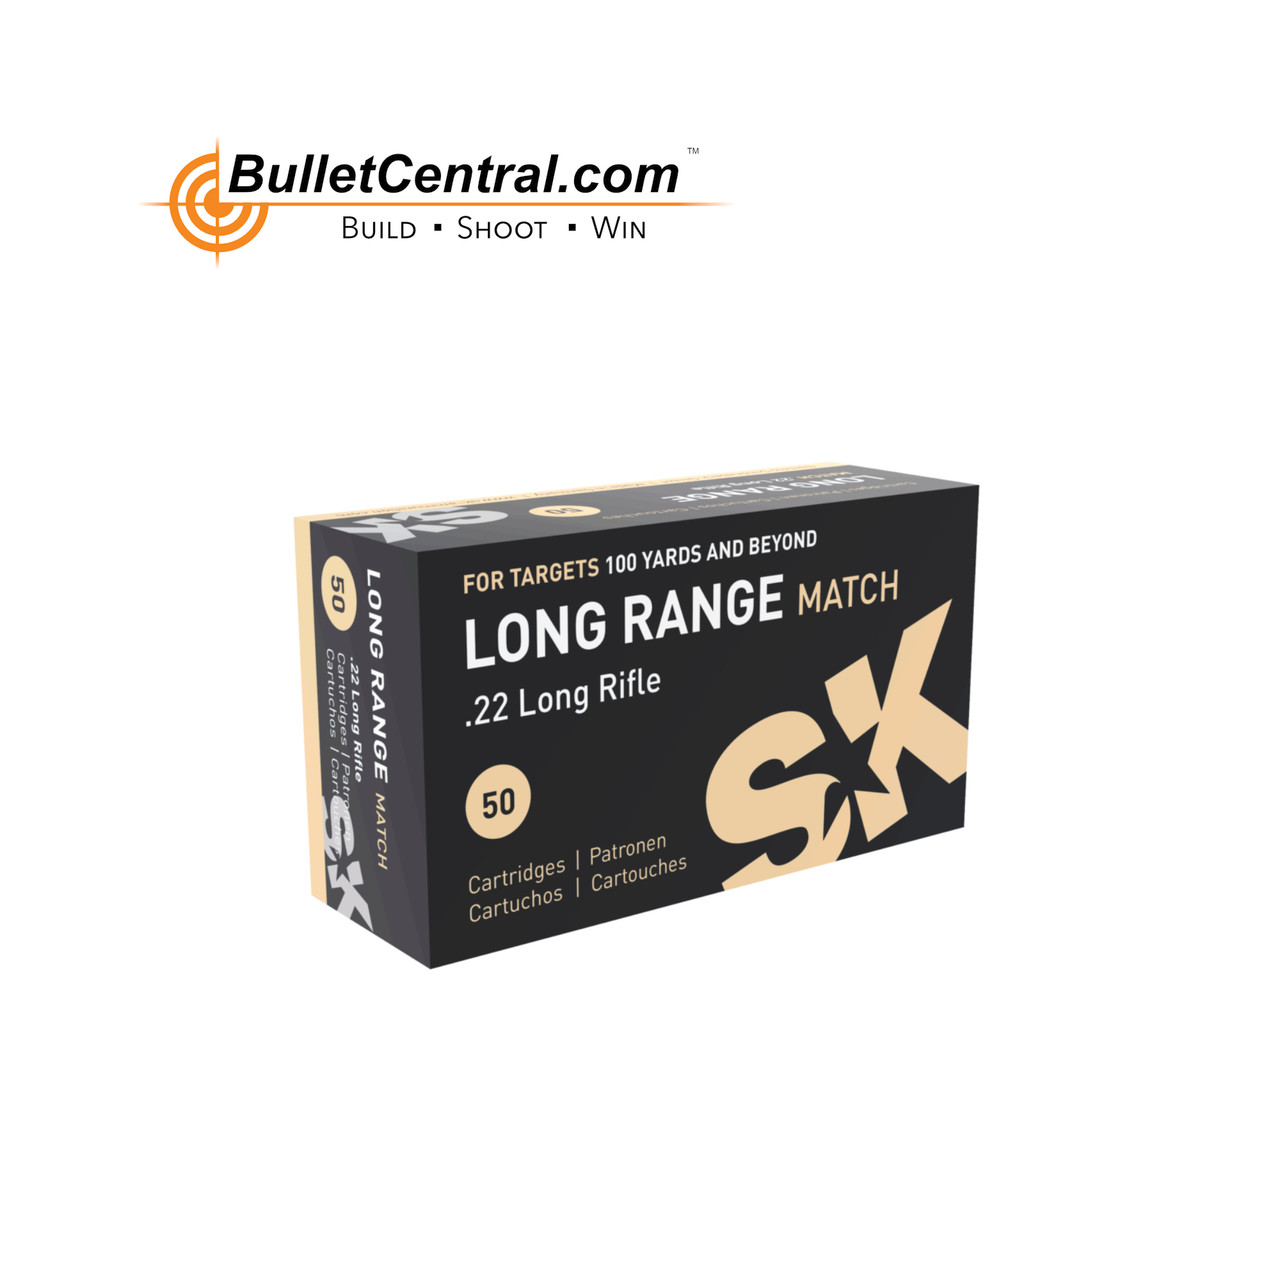 SK .22 LR Long Range Match 420158 (Box of 50) Precision Ammunition for Exceptional Long-Range Shooting